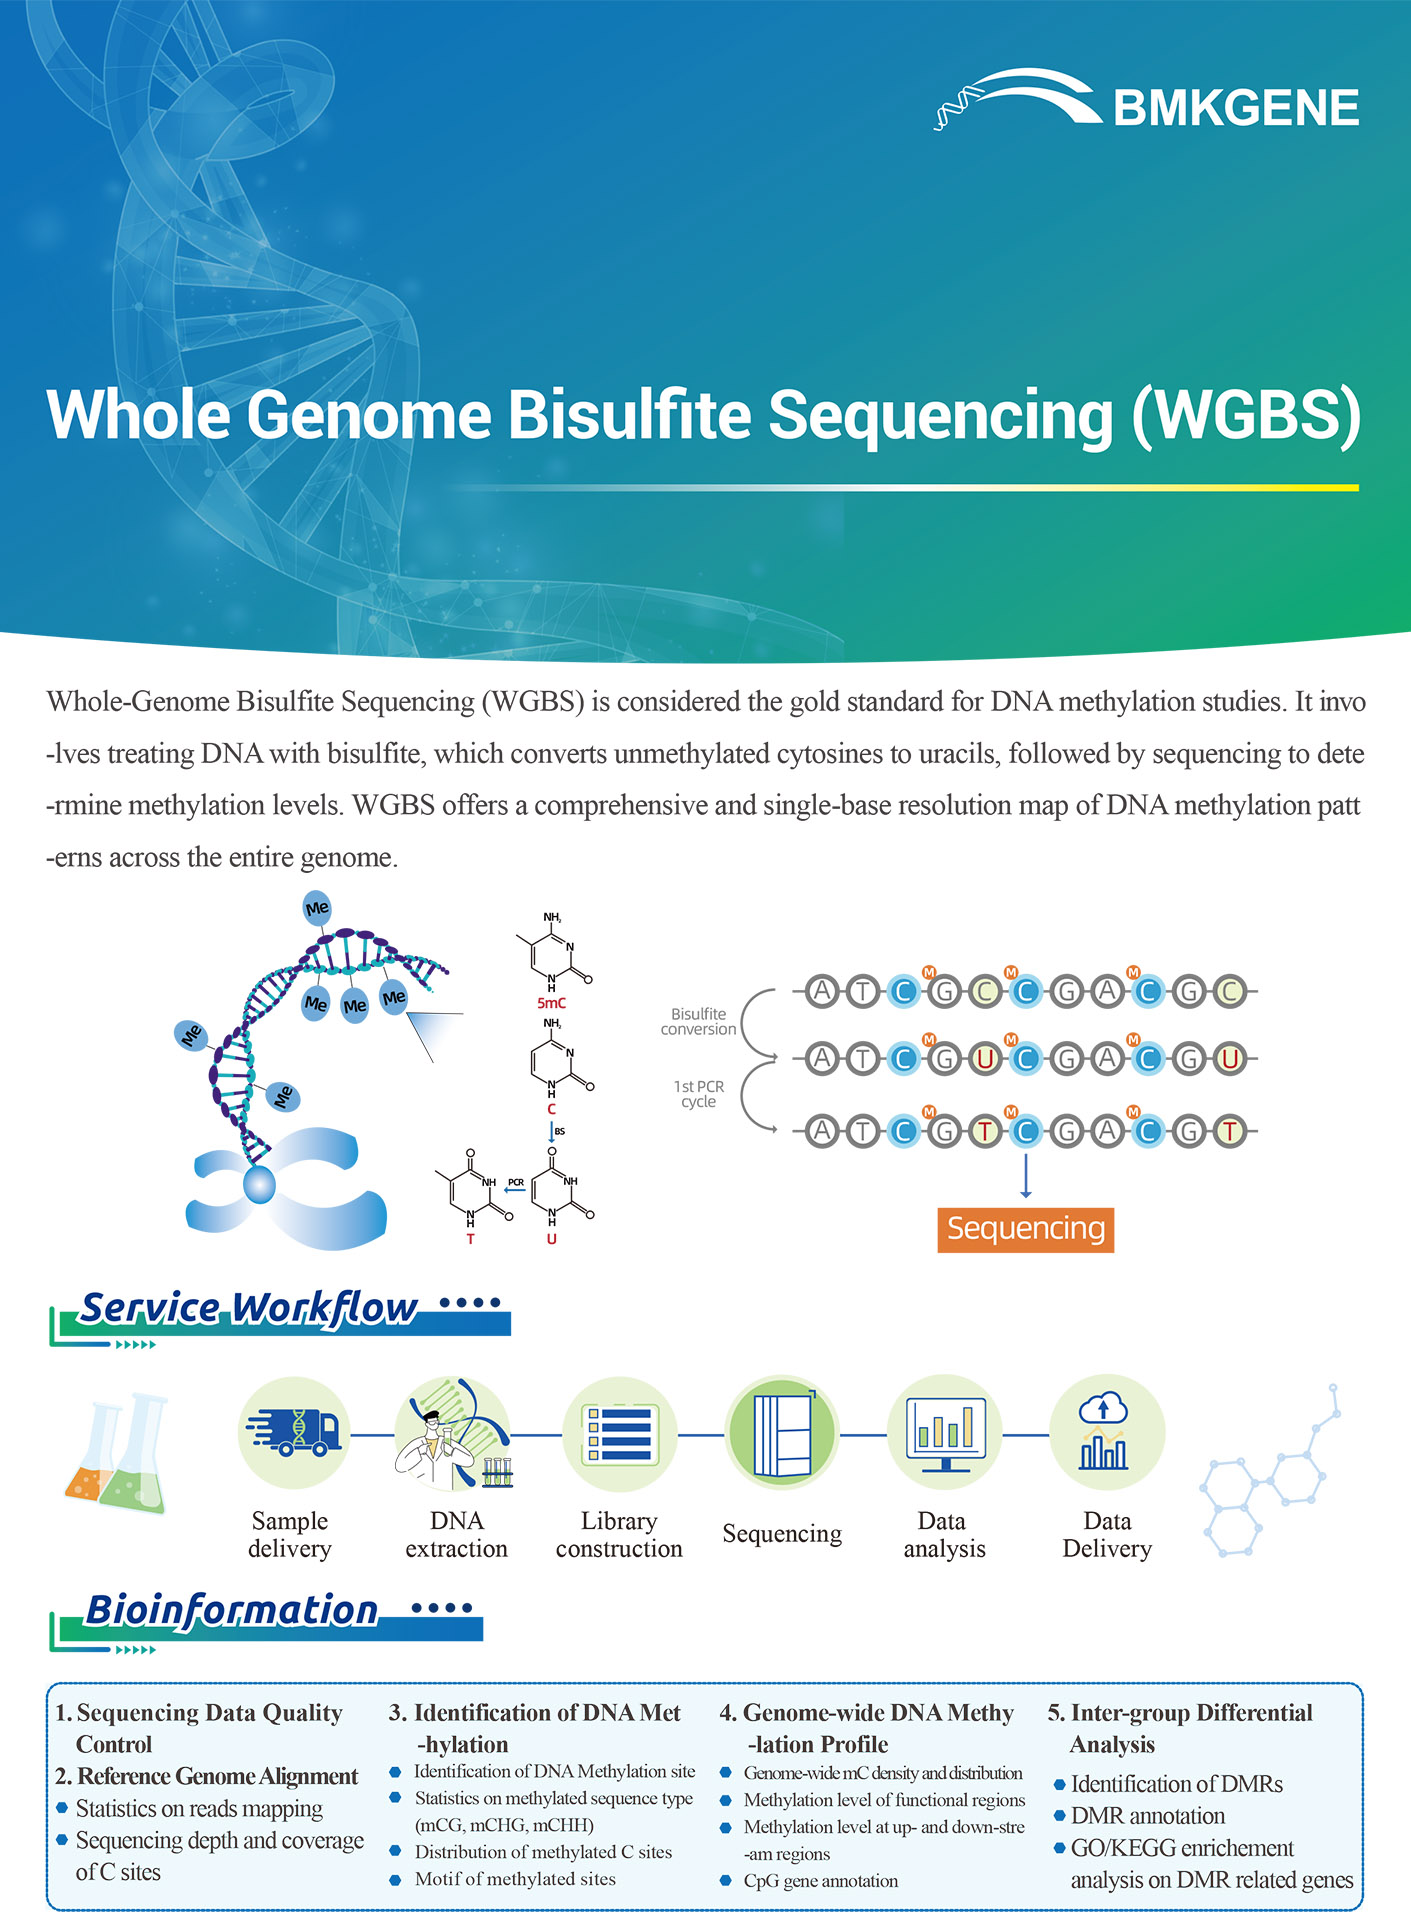 https://www.bmkgene.com/uploads/Whole-Genome-Bisulfite-Sequencing-WGBS-BMKGENE-2310.pdf